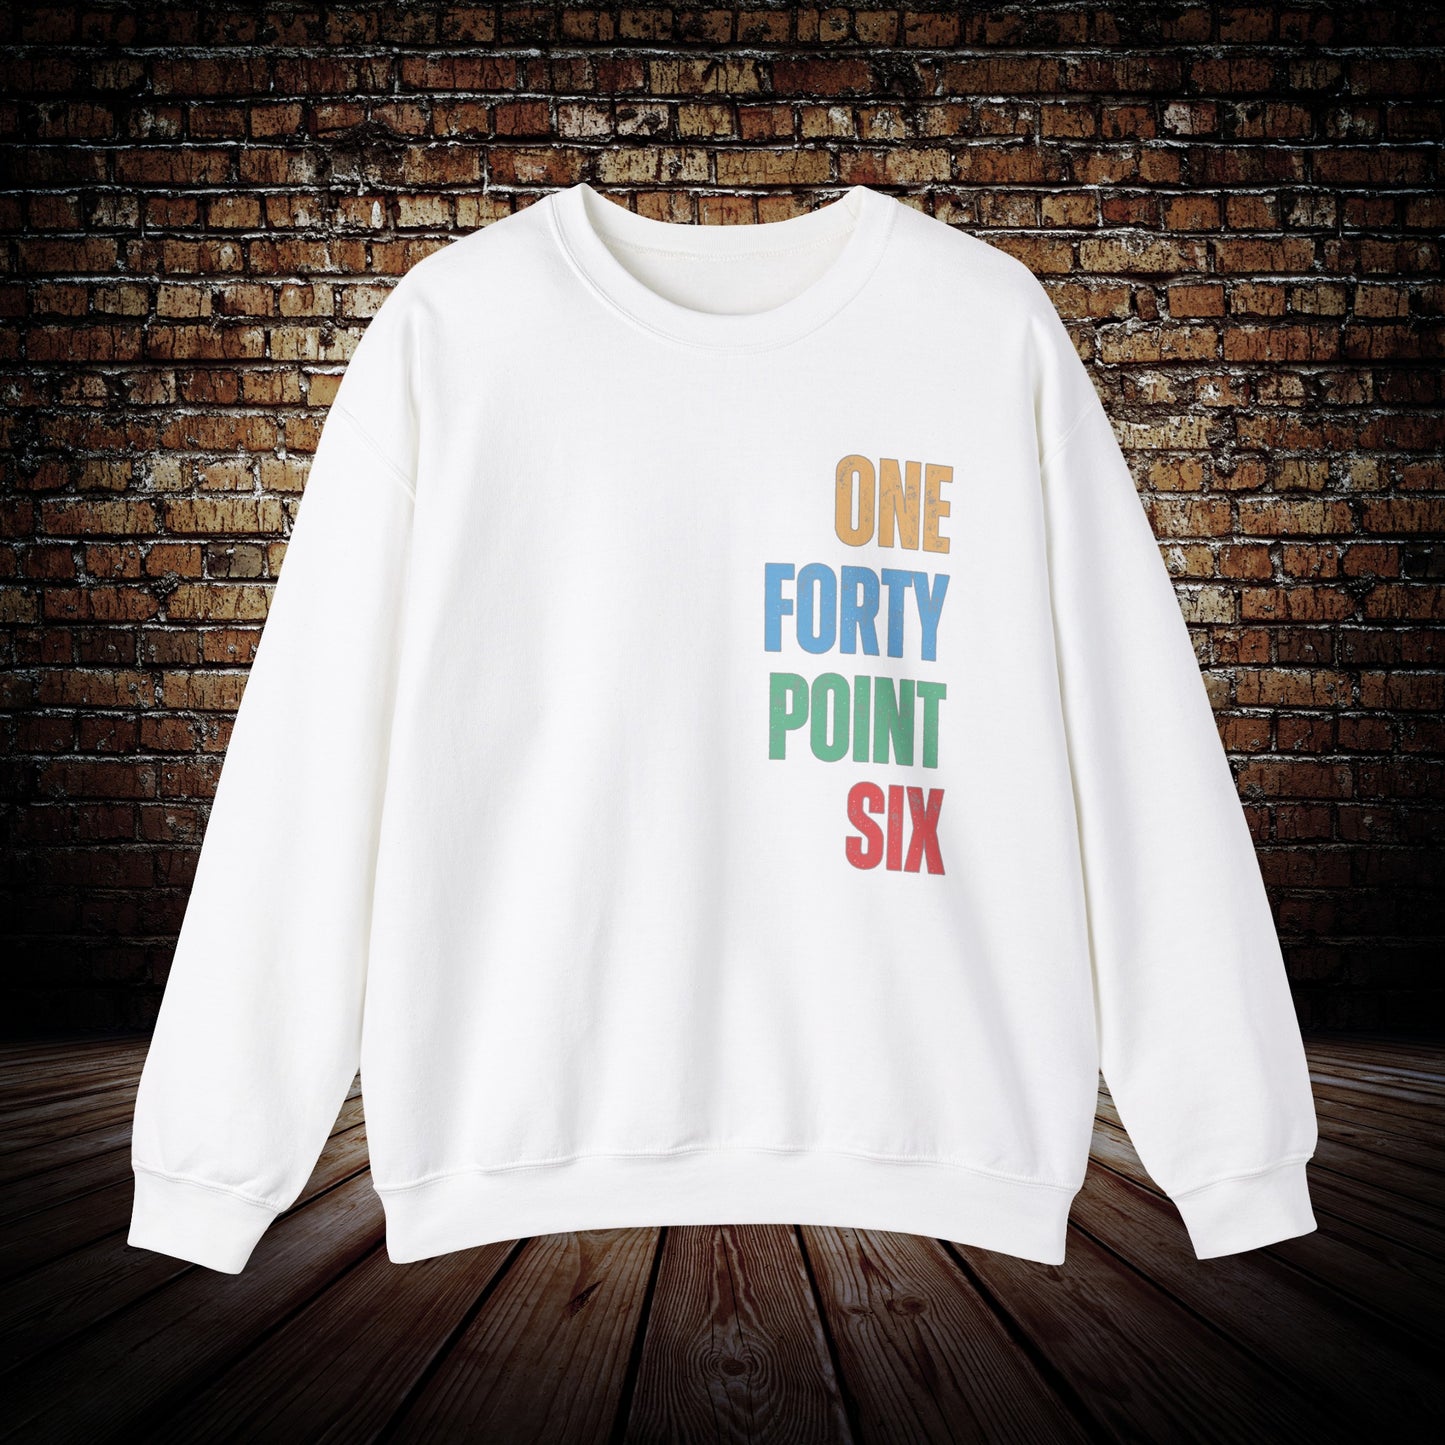 Unisex One Forty Point Six Triathlon sweatshirt